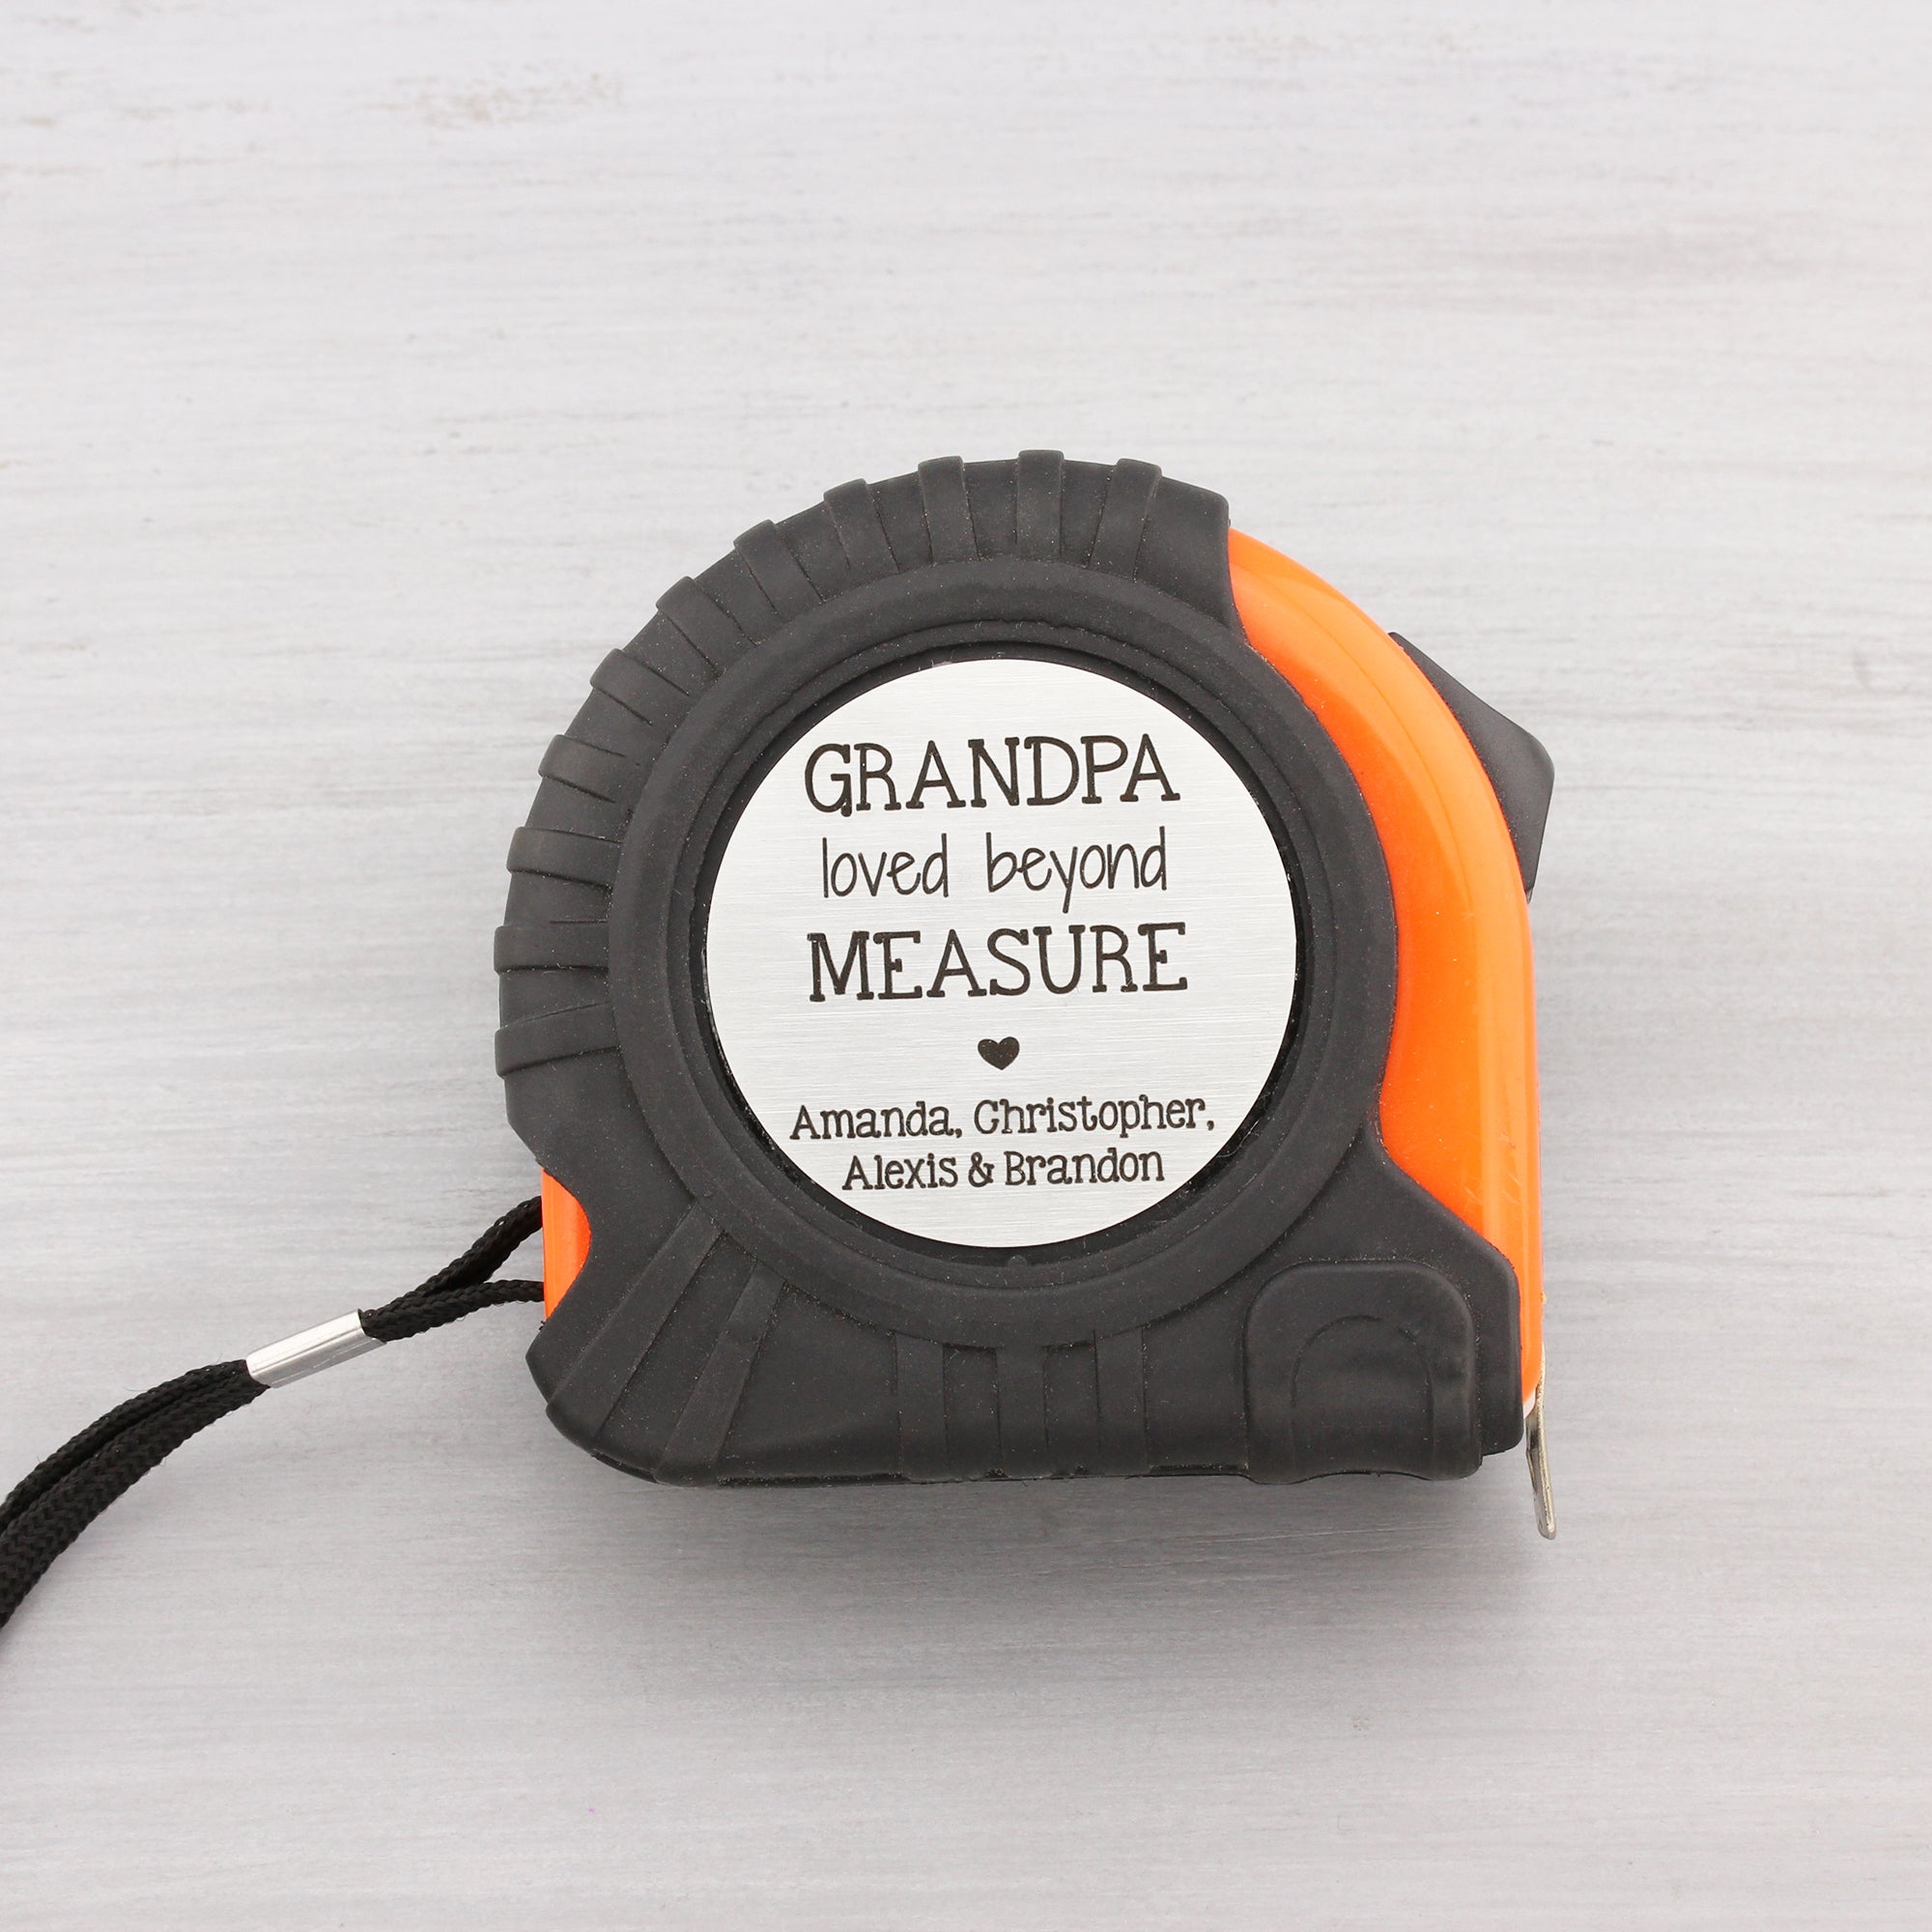 Grandpa tape measure, loved beyond measure, personalized tool